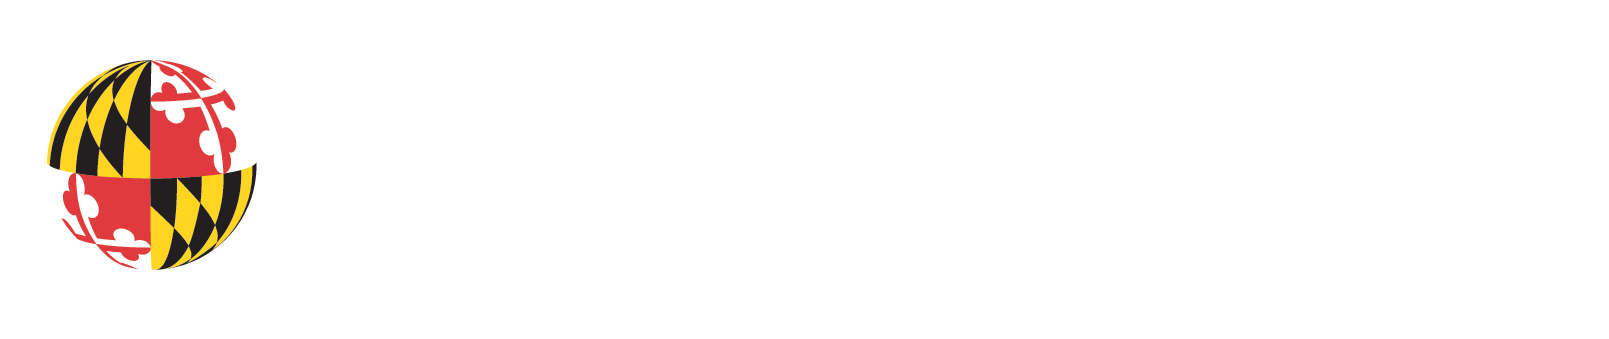 The Graduate School logo